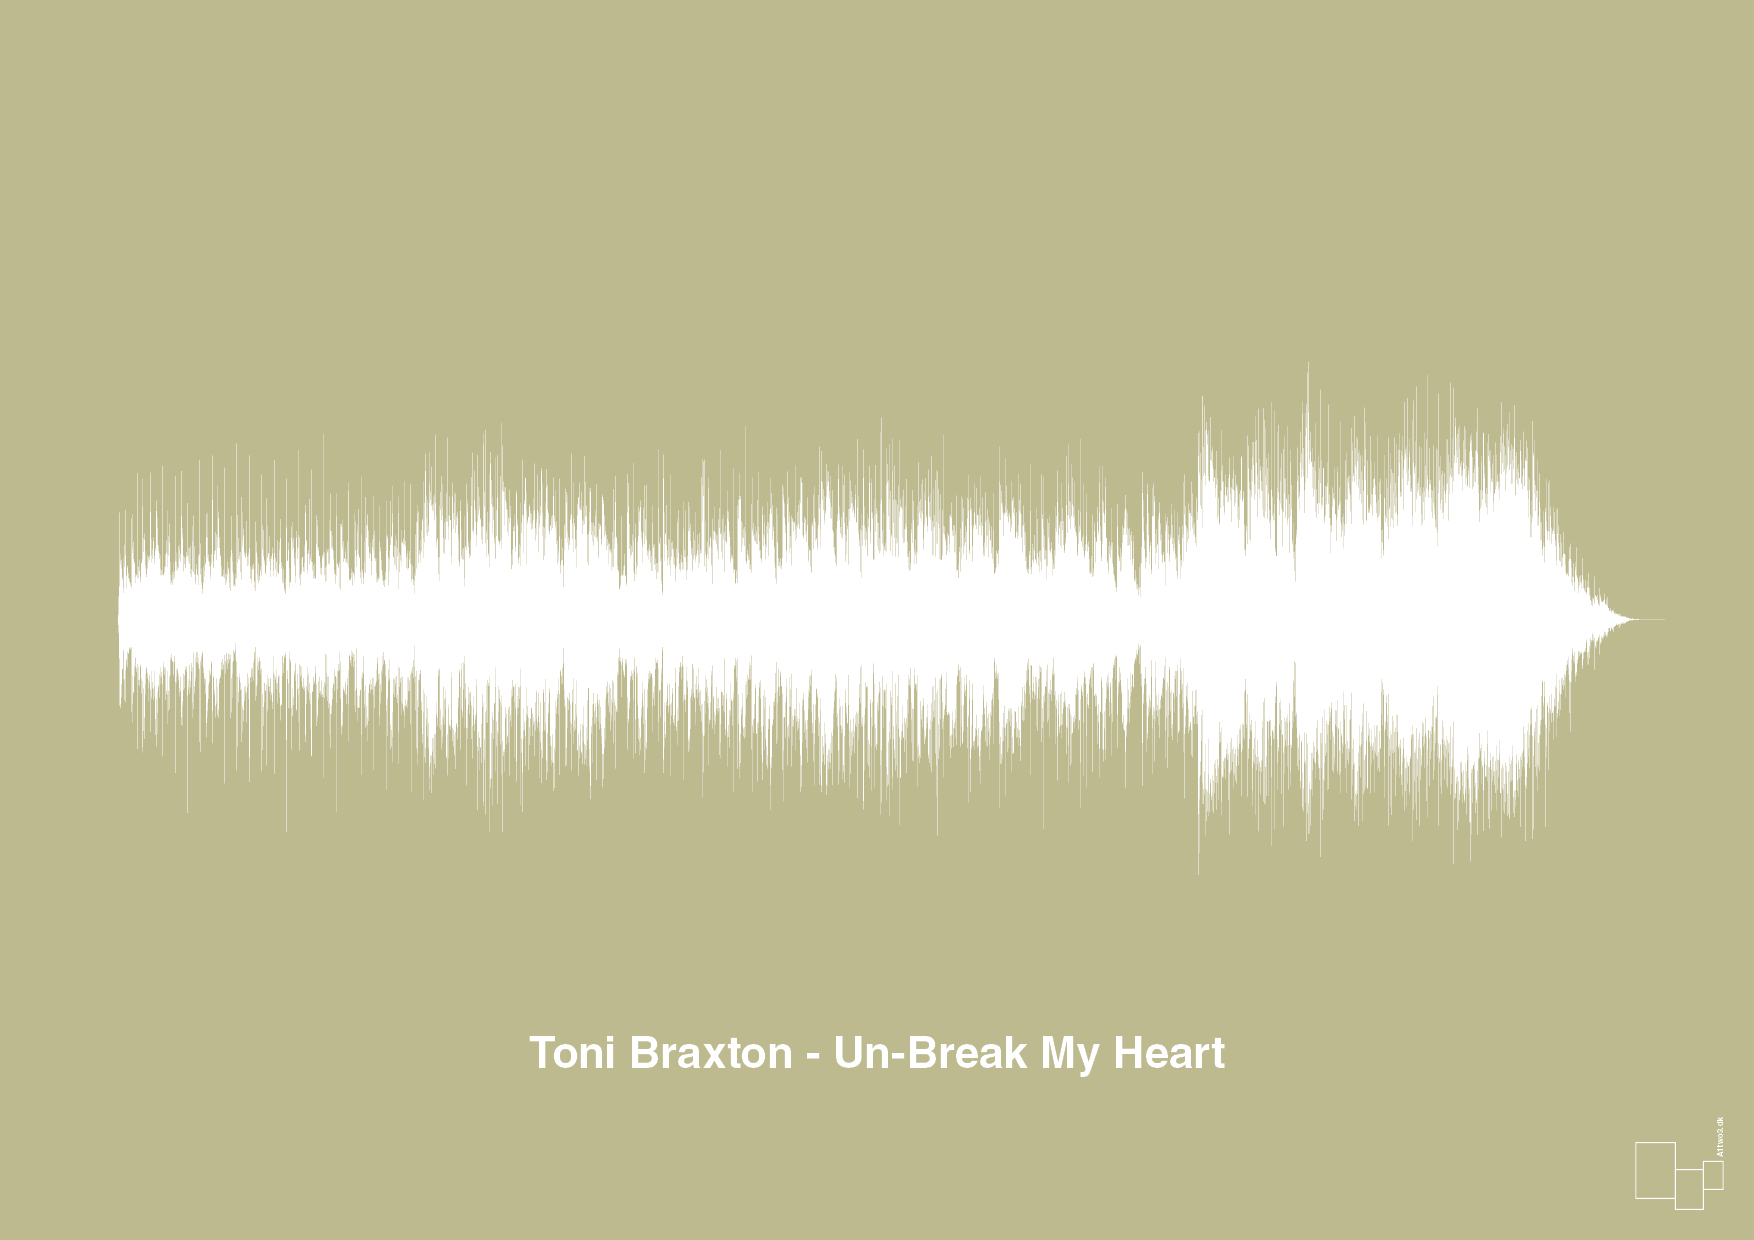 toni braxton - un-break my heart - Plakat med Musik i Back to Nature